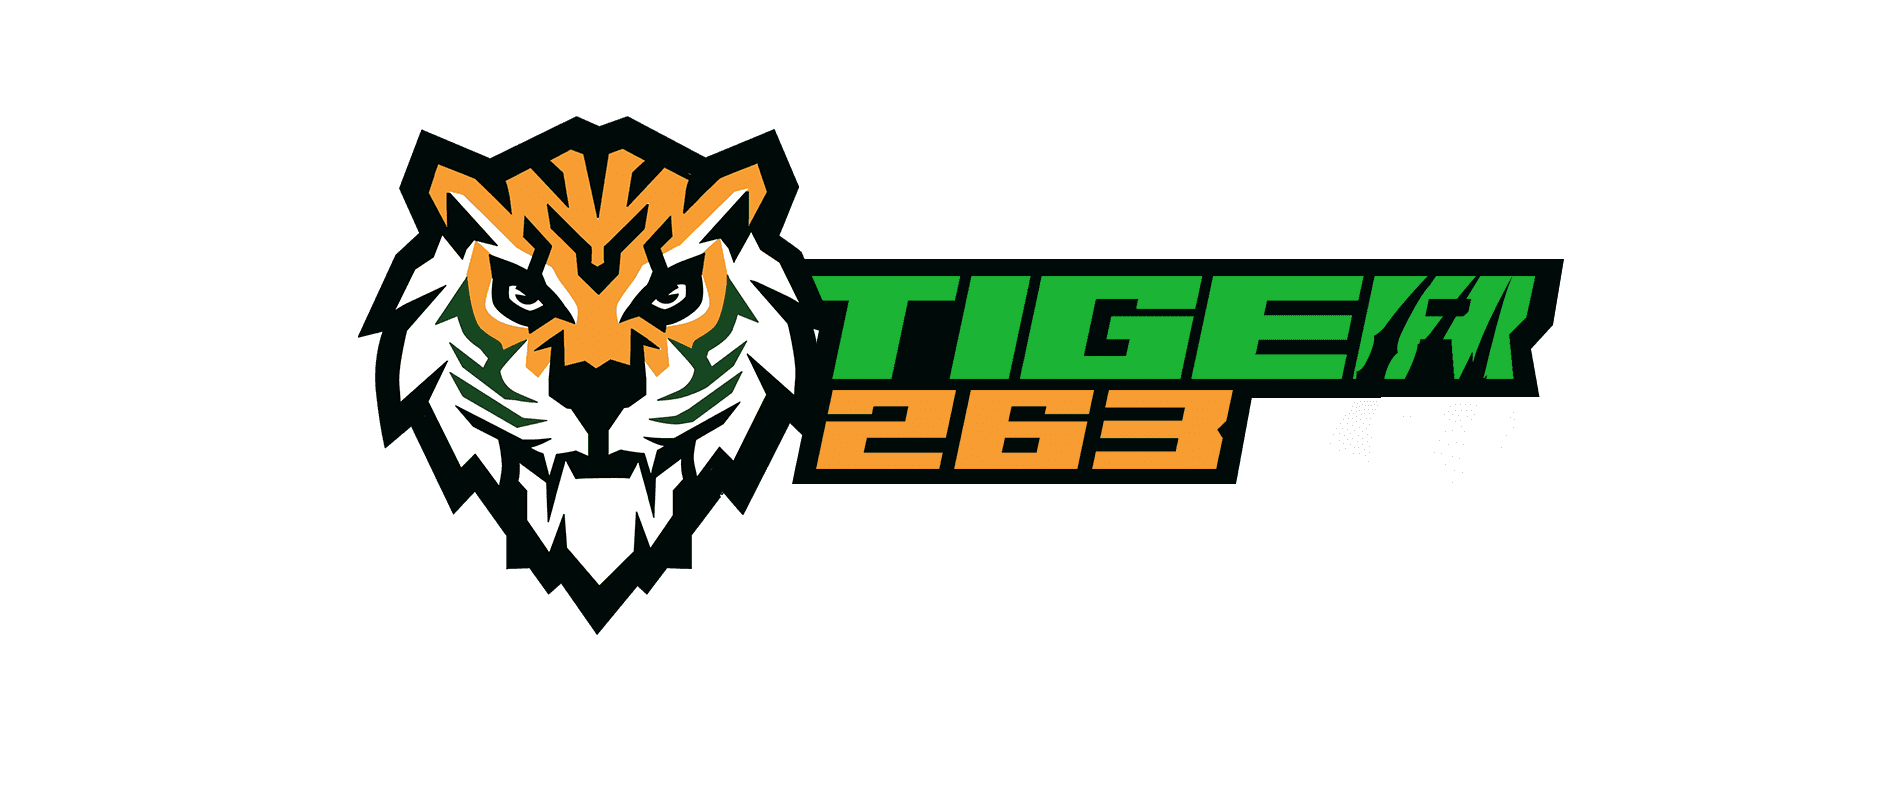 Tiger263 অনলাইন ক্যাসিনো পর্যালোচনা